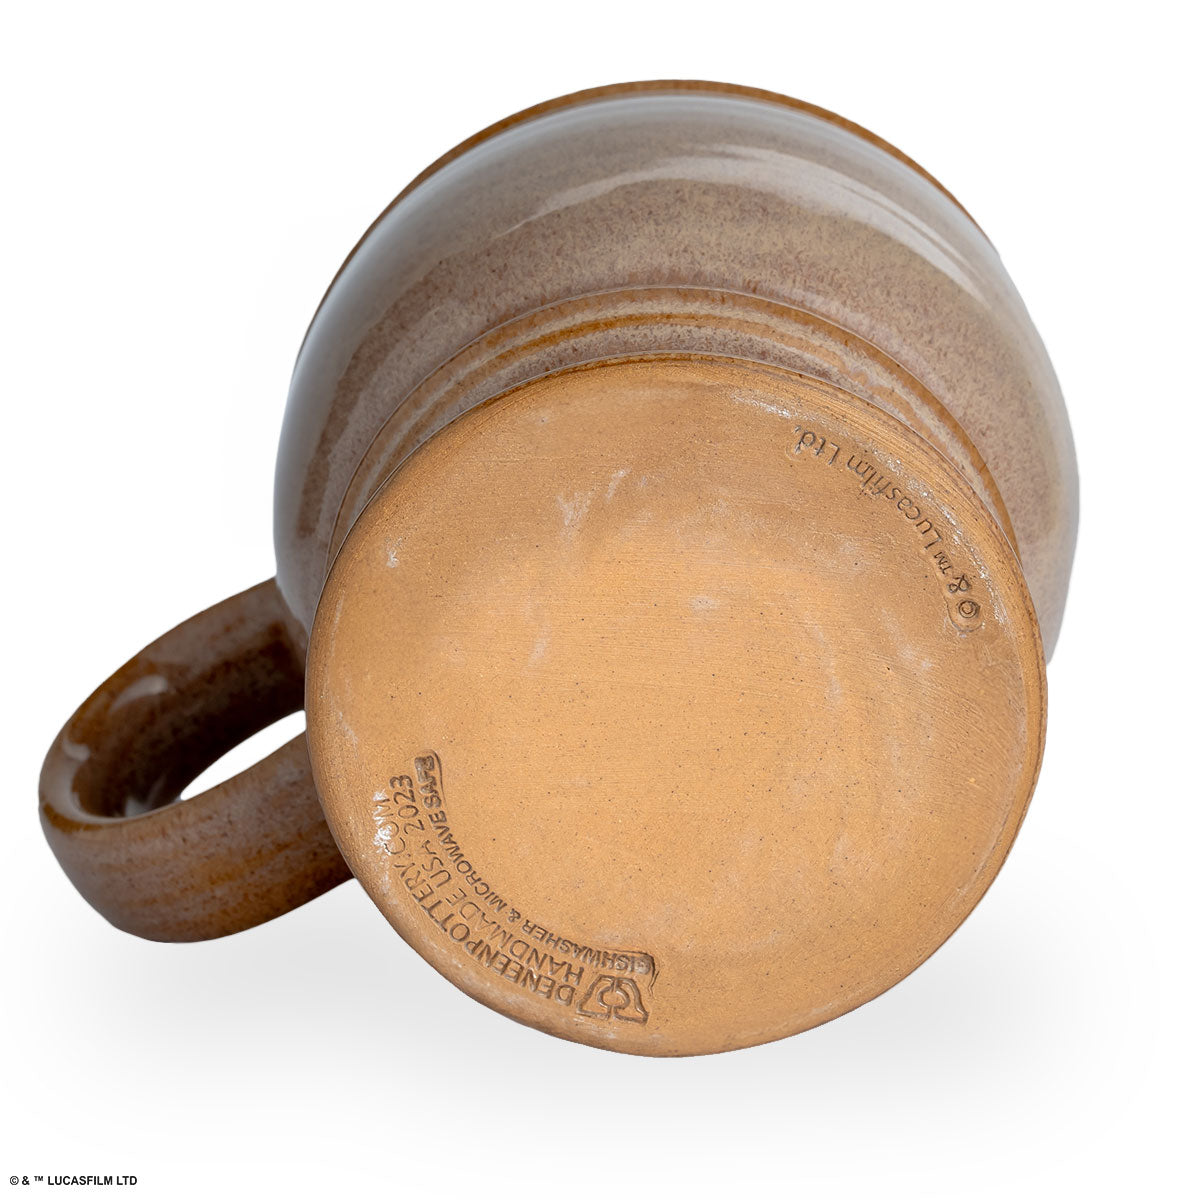 Frankenbones Handthrown Mug – Bones Coffee Company